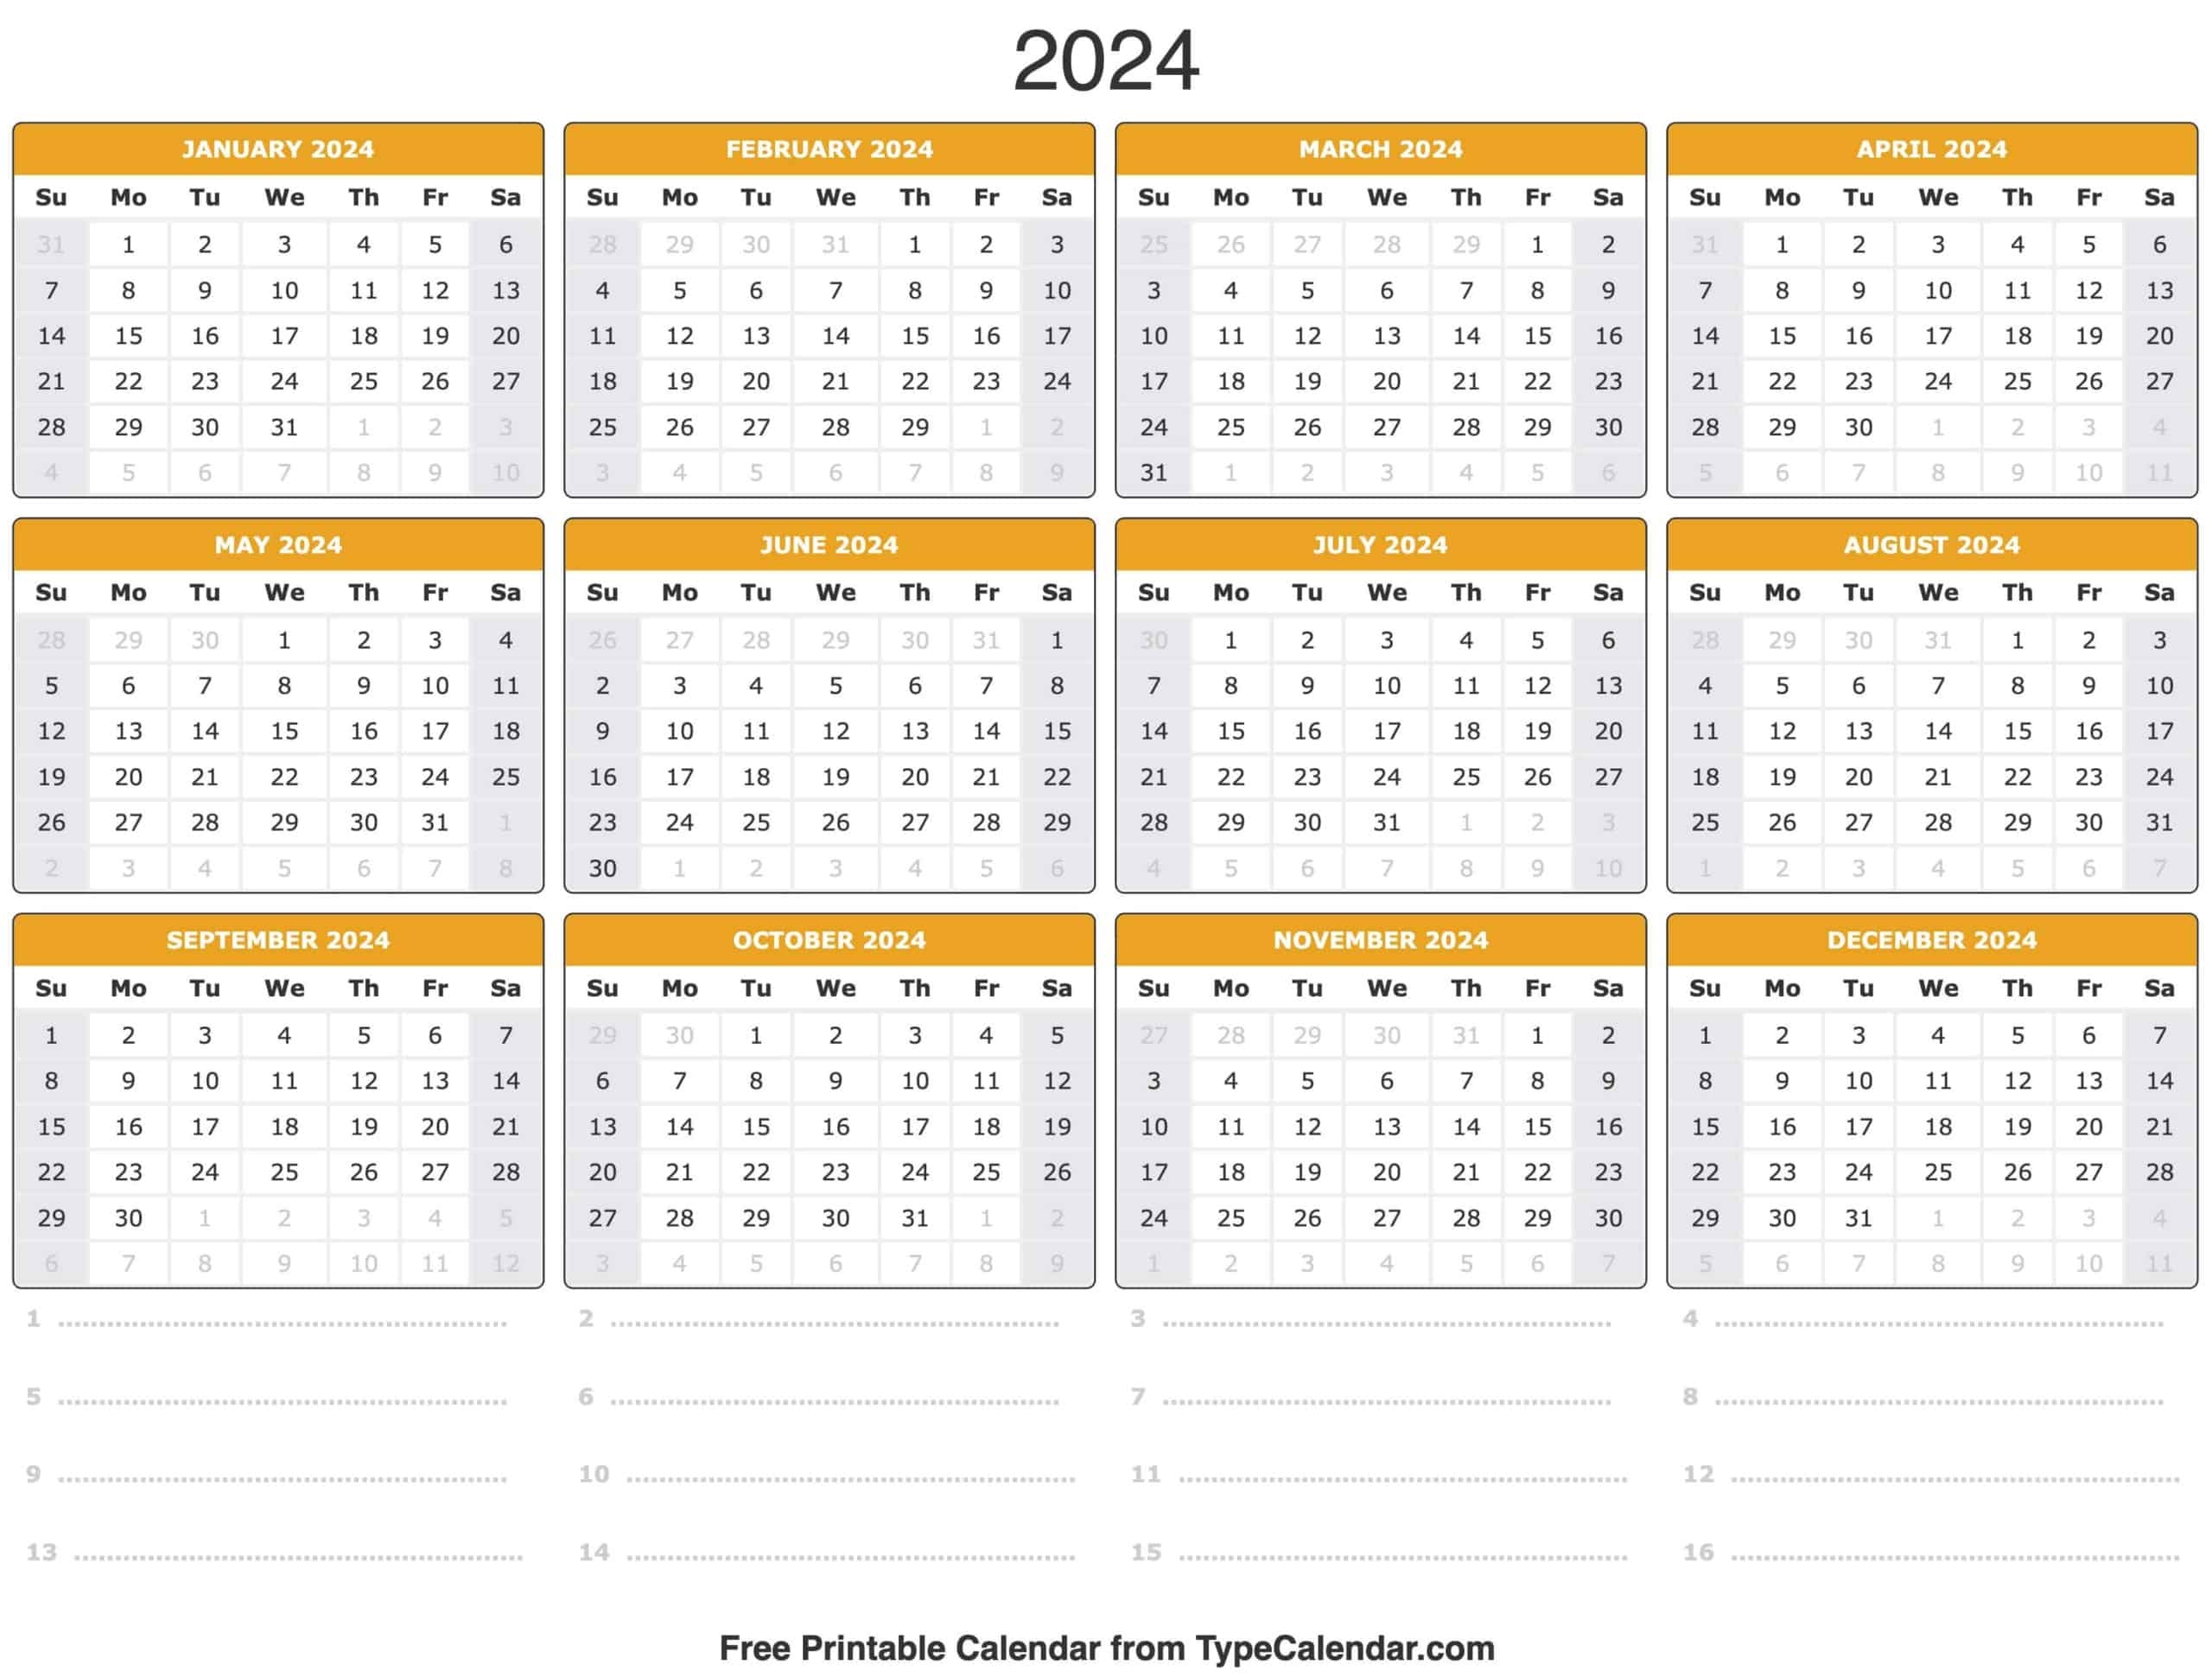 2024 Calendar: Free Printable Calendar With Holidays with Free Printable Baseball Calendar 2024